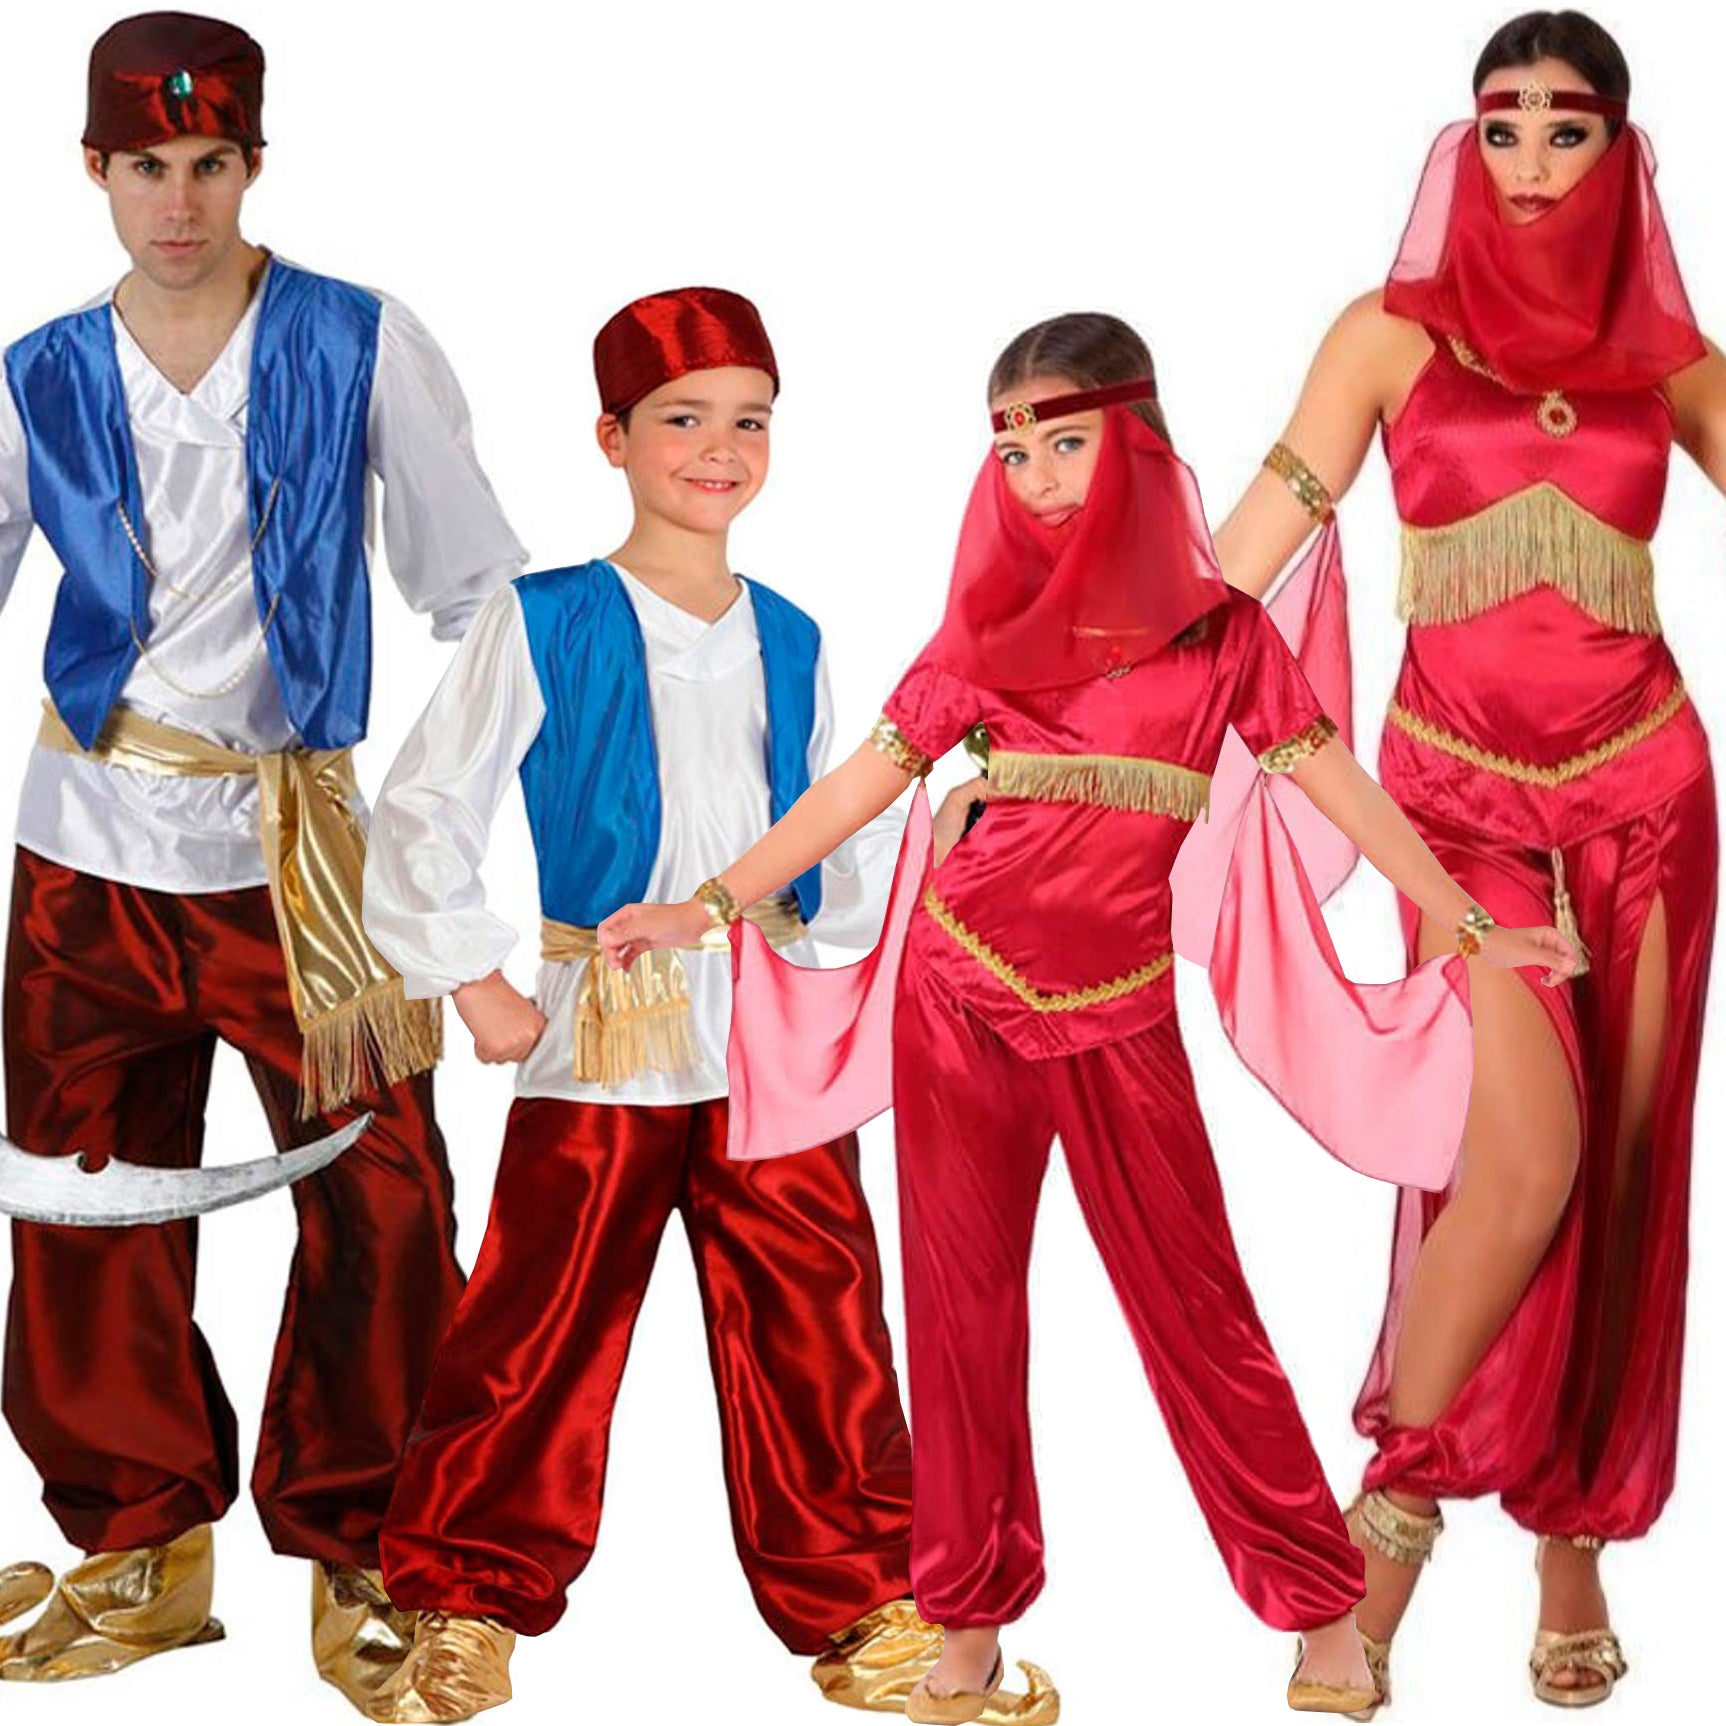 Fiesta de disfraces - arabe  Disfraz arabe mujer, Disfraces